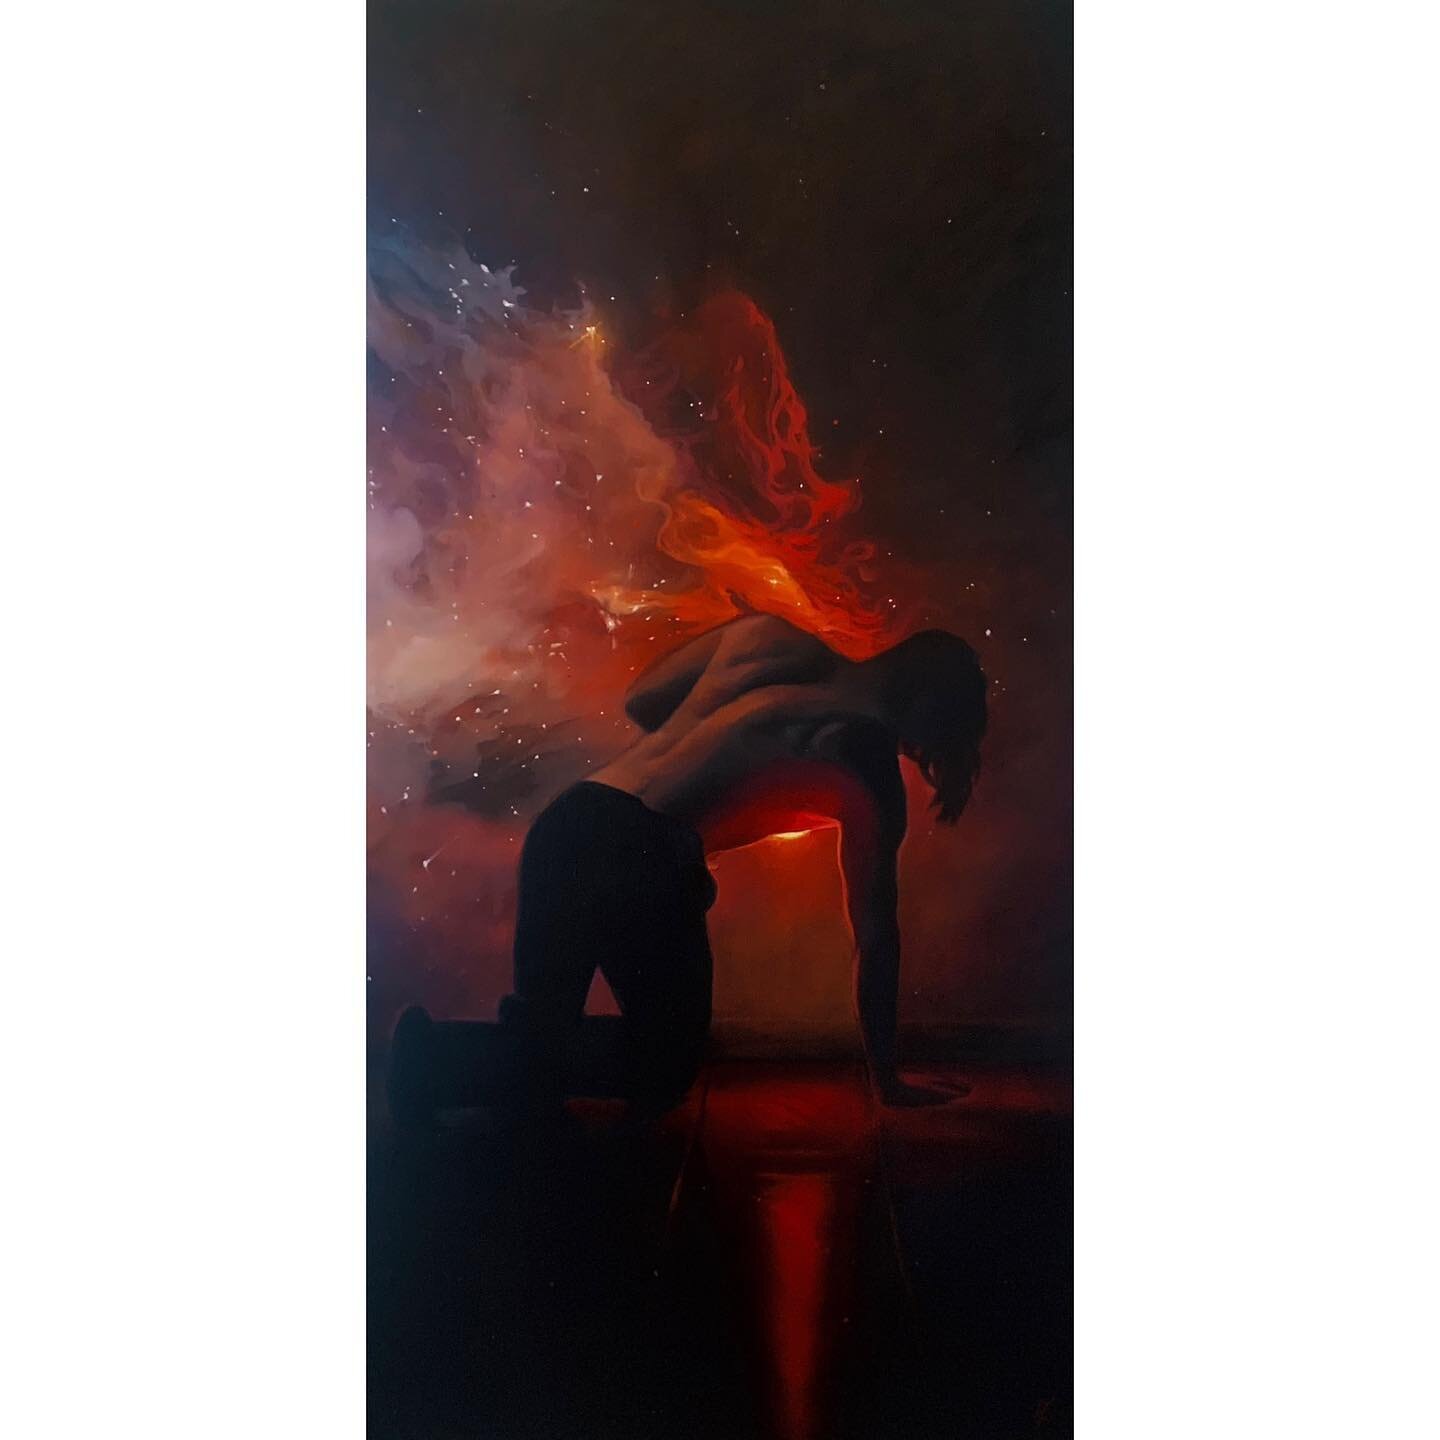 &laquo;&nbsp;Fire Heart. Don't stop.

Breathe in. 
Breathe out.&nbsp;&raquo;

Heartbeats ❤️&zwj;🔥
🪶M. DIXON 

.
.
.
.
.
.
.

#art #artgallery #artcontemporain #artcollector #artwork #peinture #oilpainting #artist #women #alchemy #darkart #noir #por